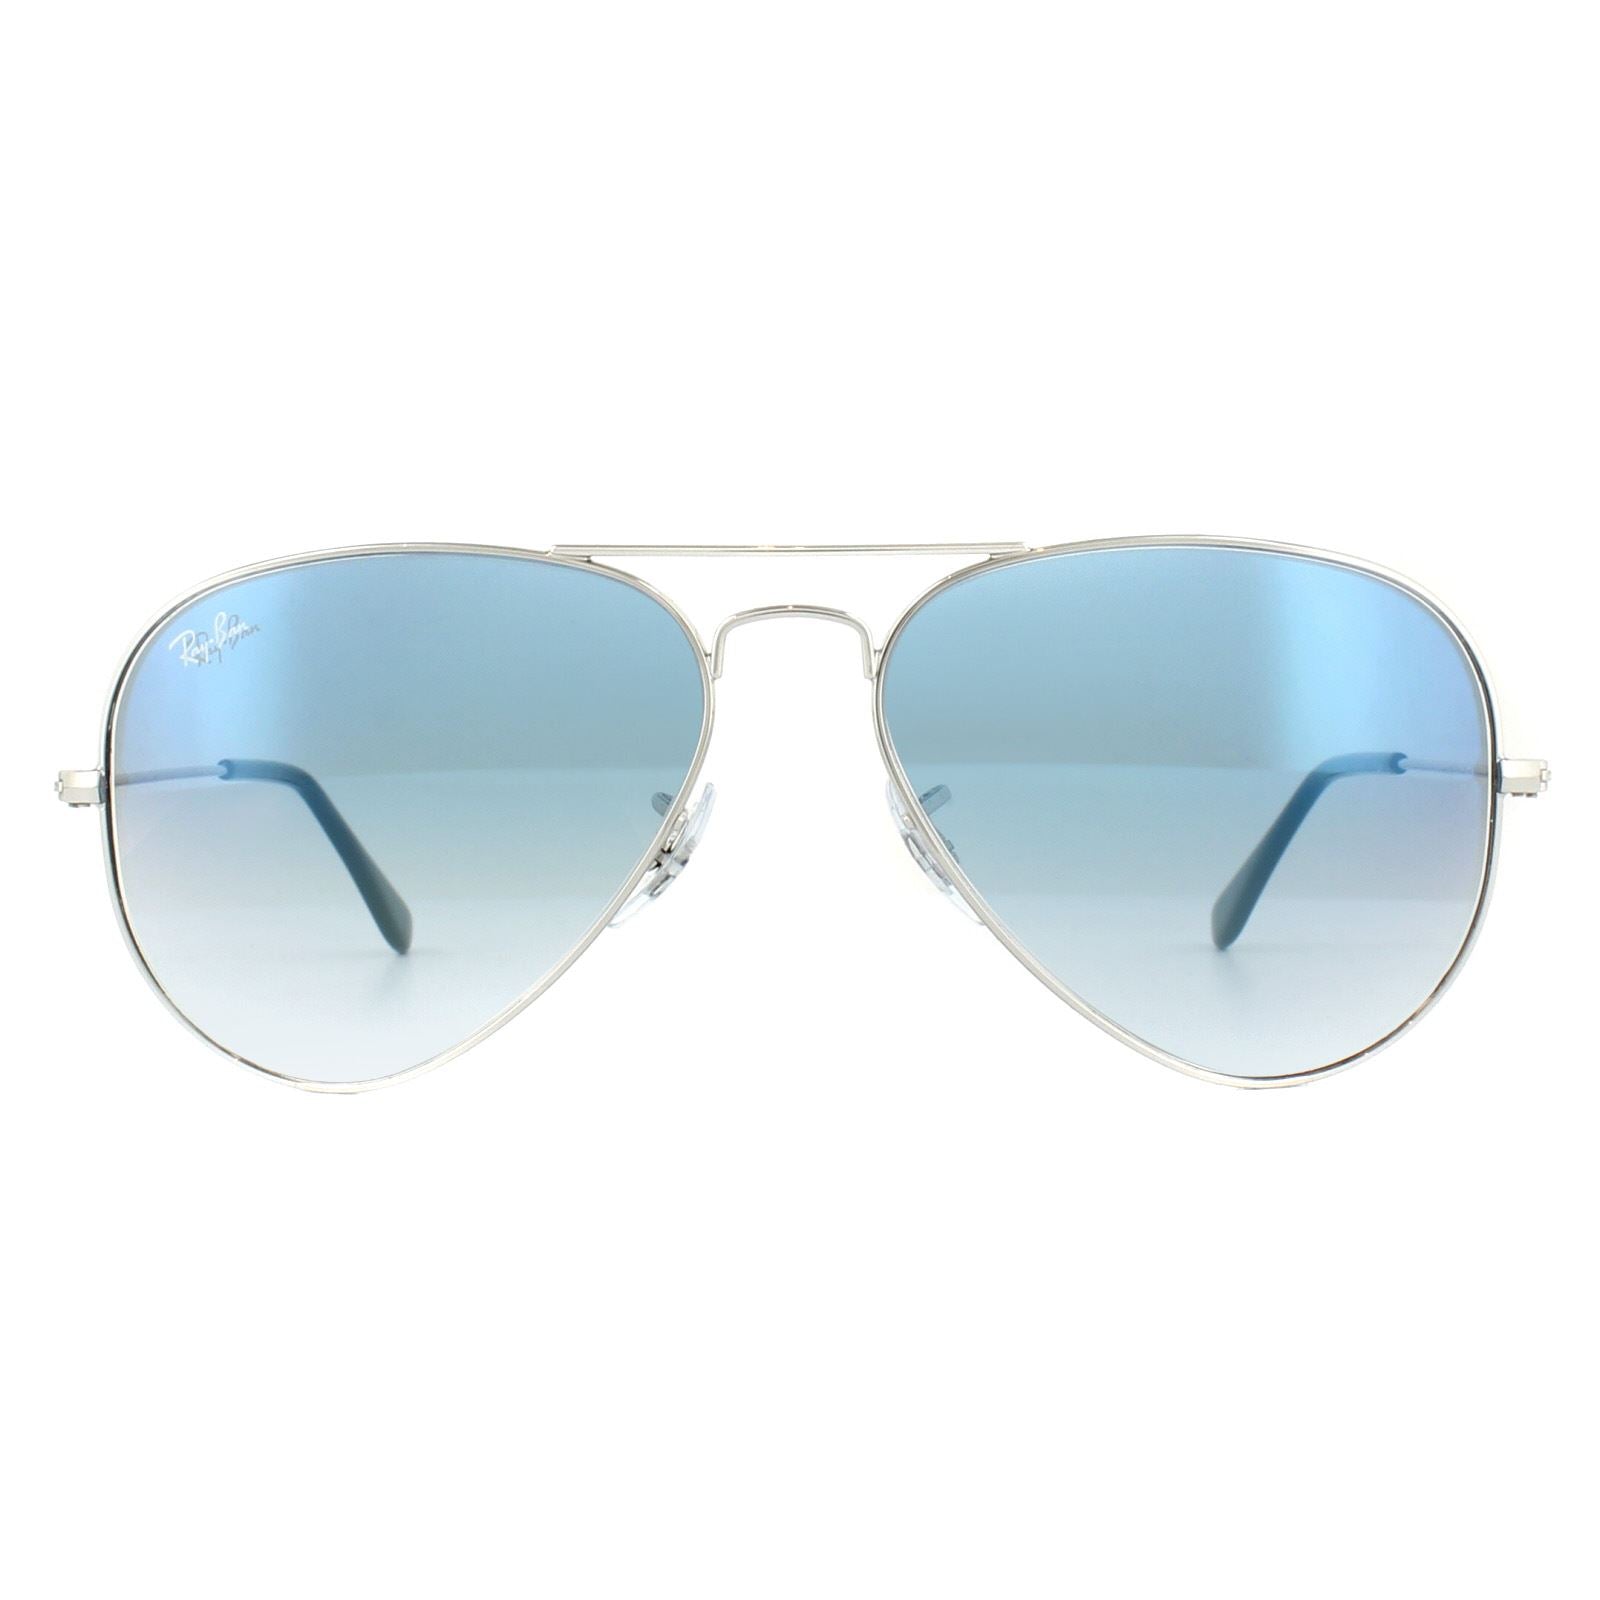 Ray-Ban Aviator RB3025 003/3F Sunglasses